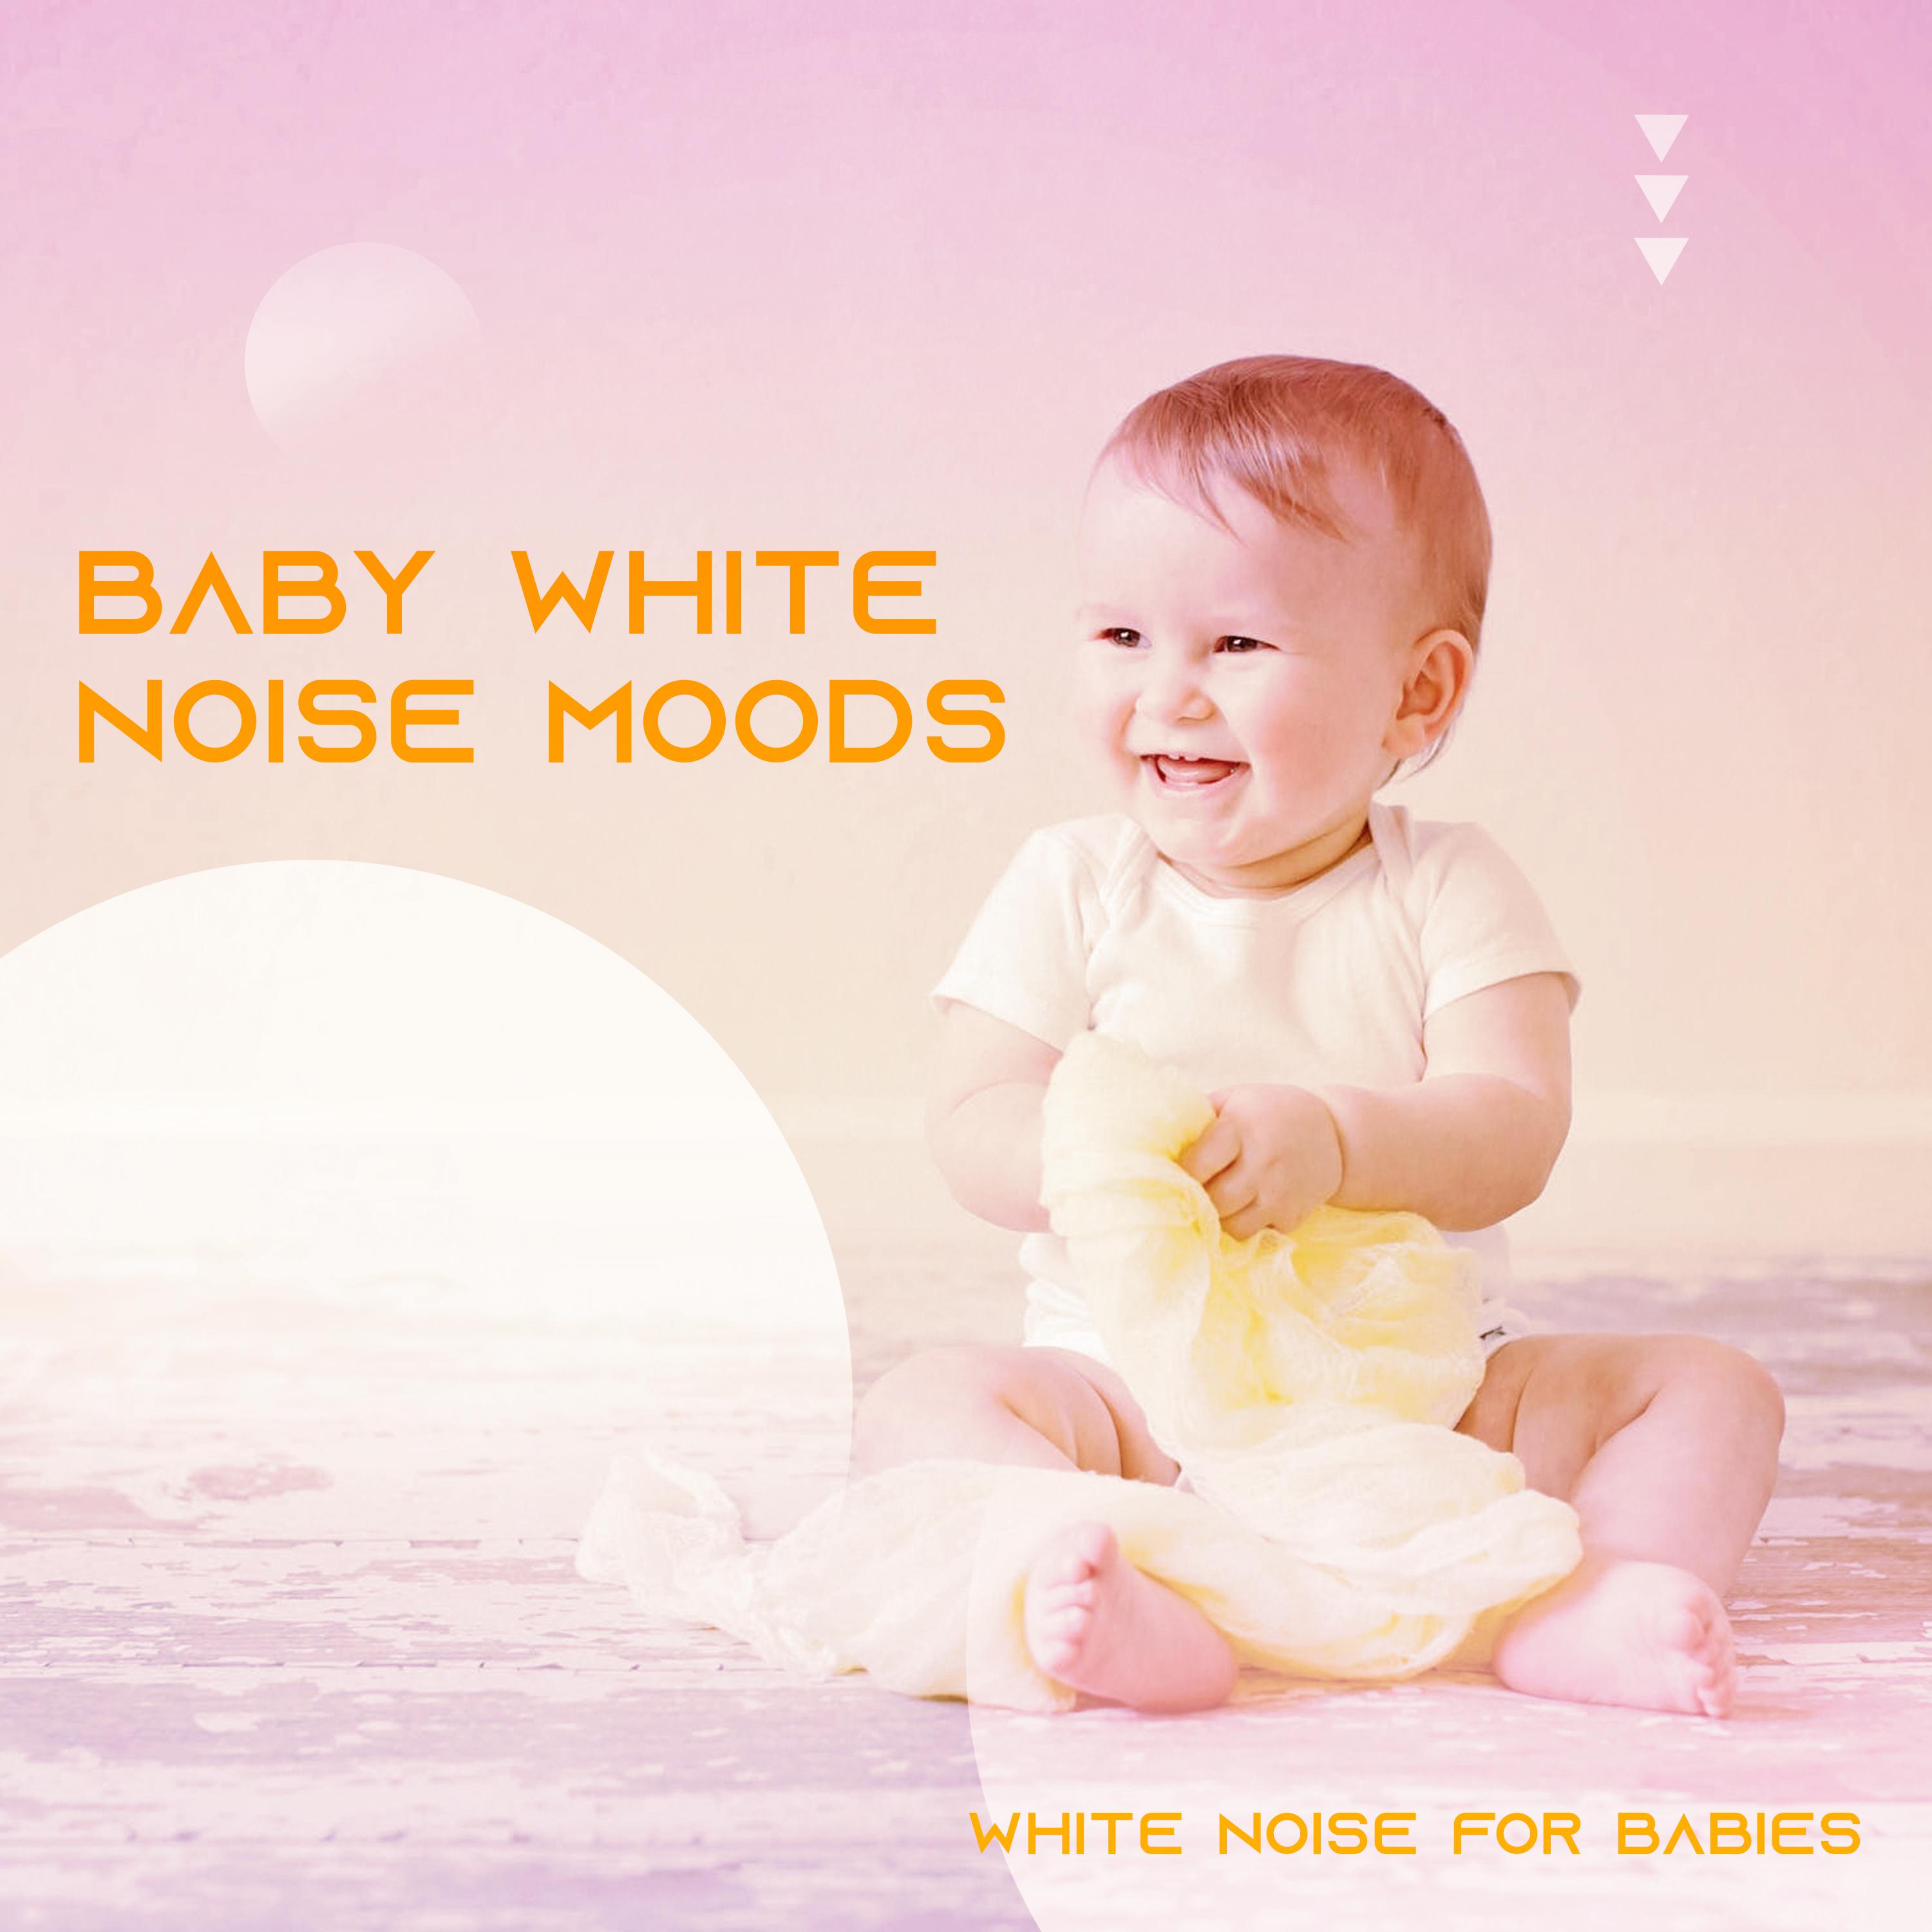 Baby White Noise Moods